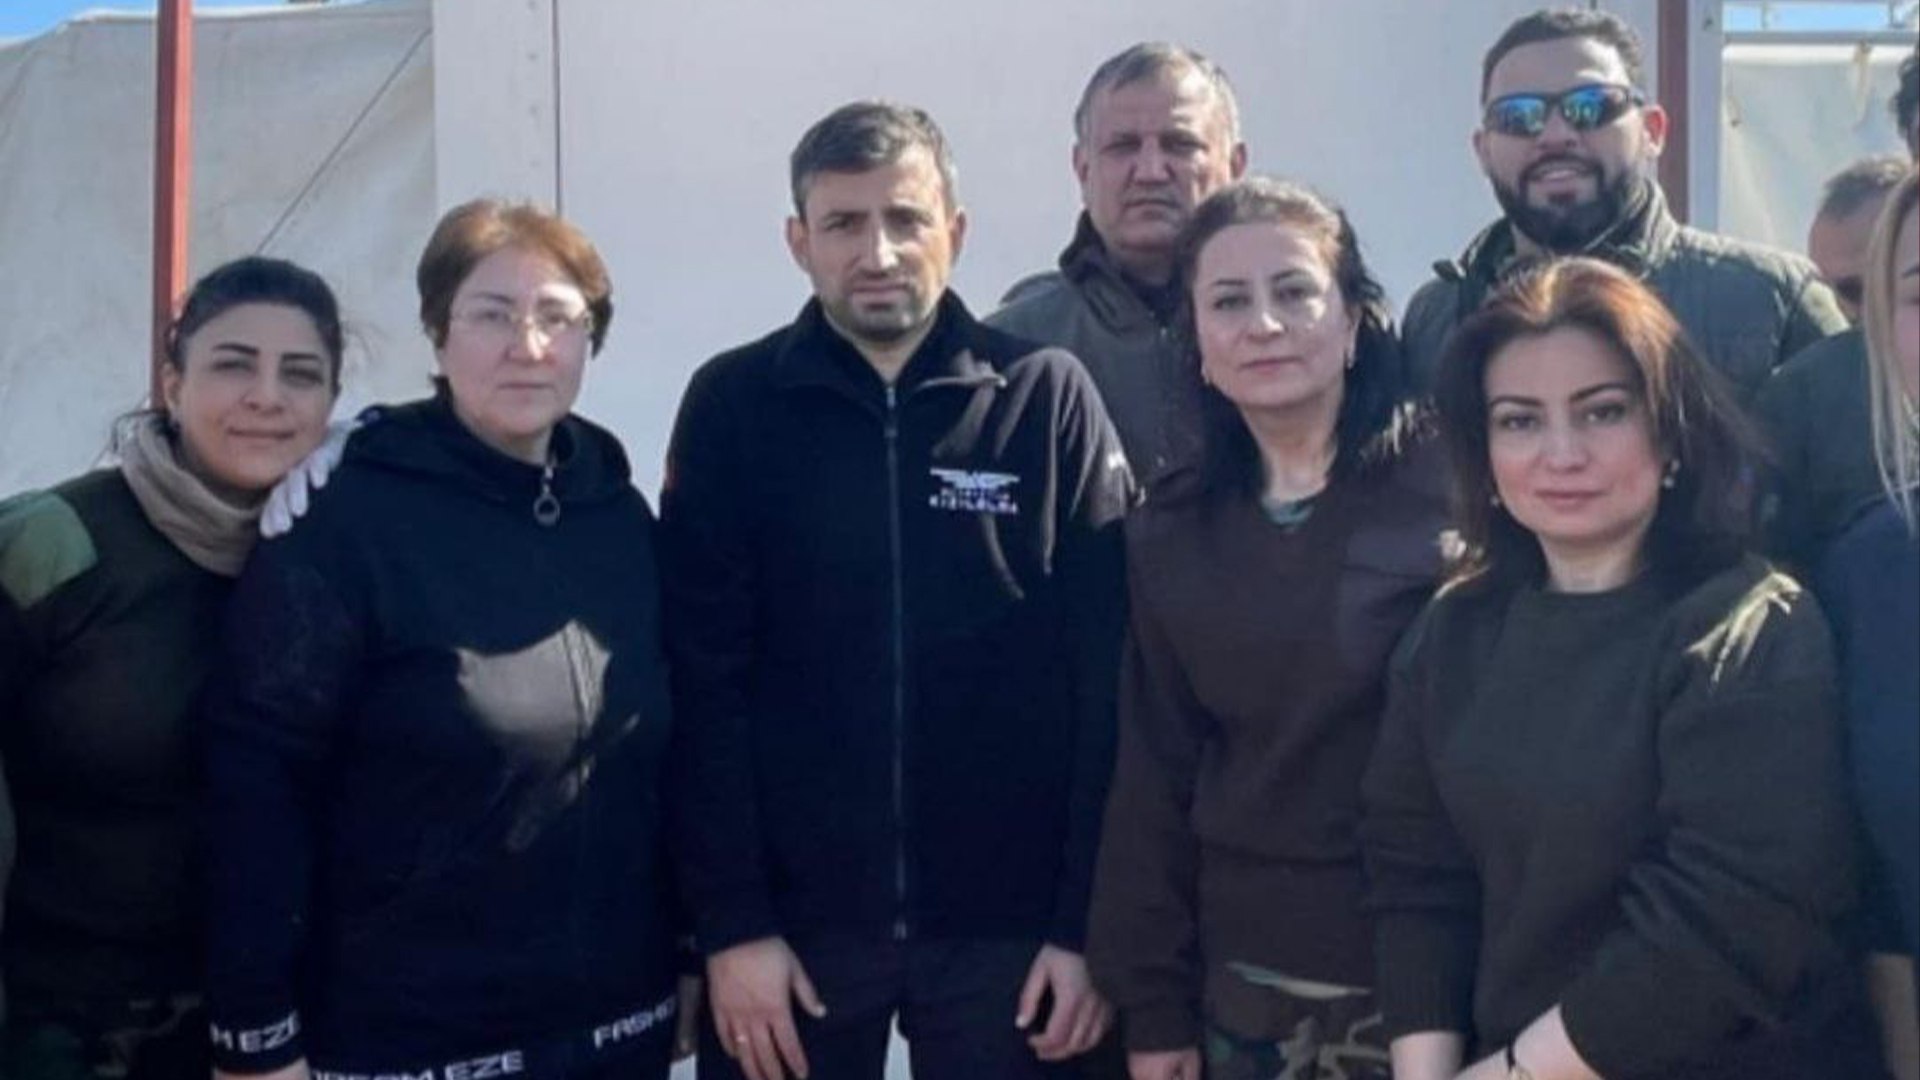 Könüllü həkimlərimiz Kahramanmaraşda Selçuk Bayraktarla bir ARADA - FOTO